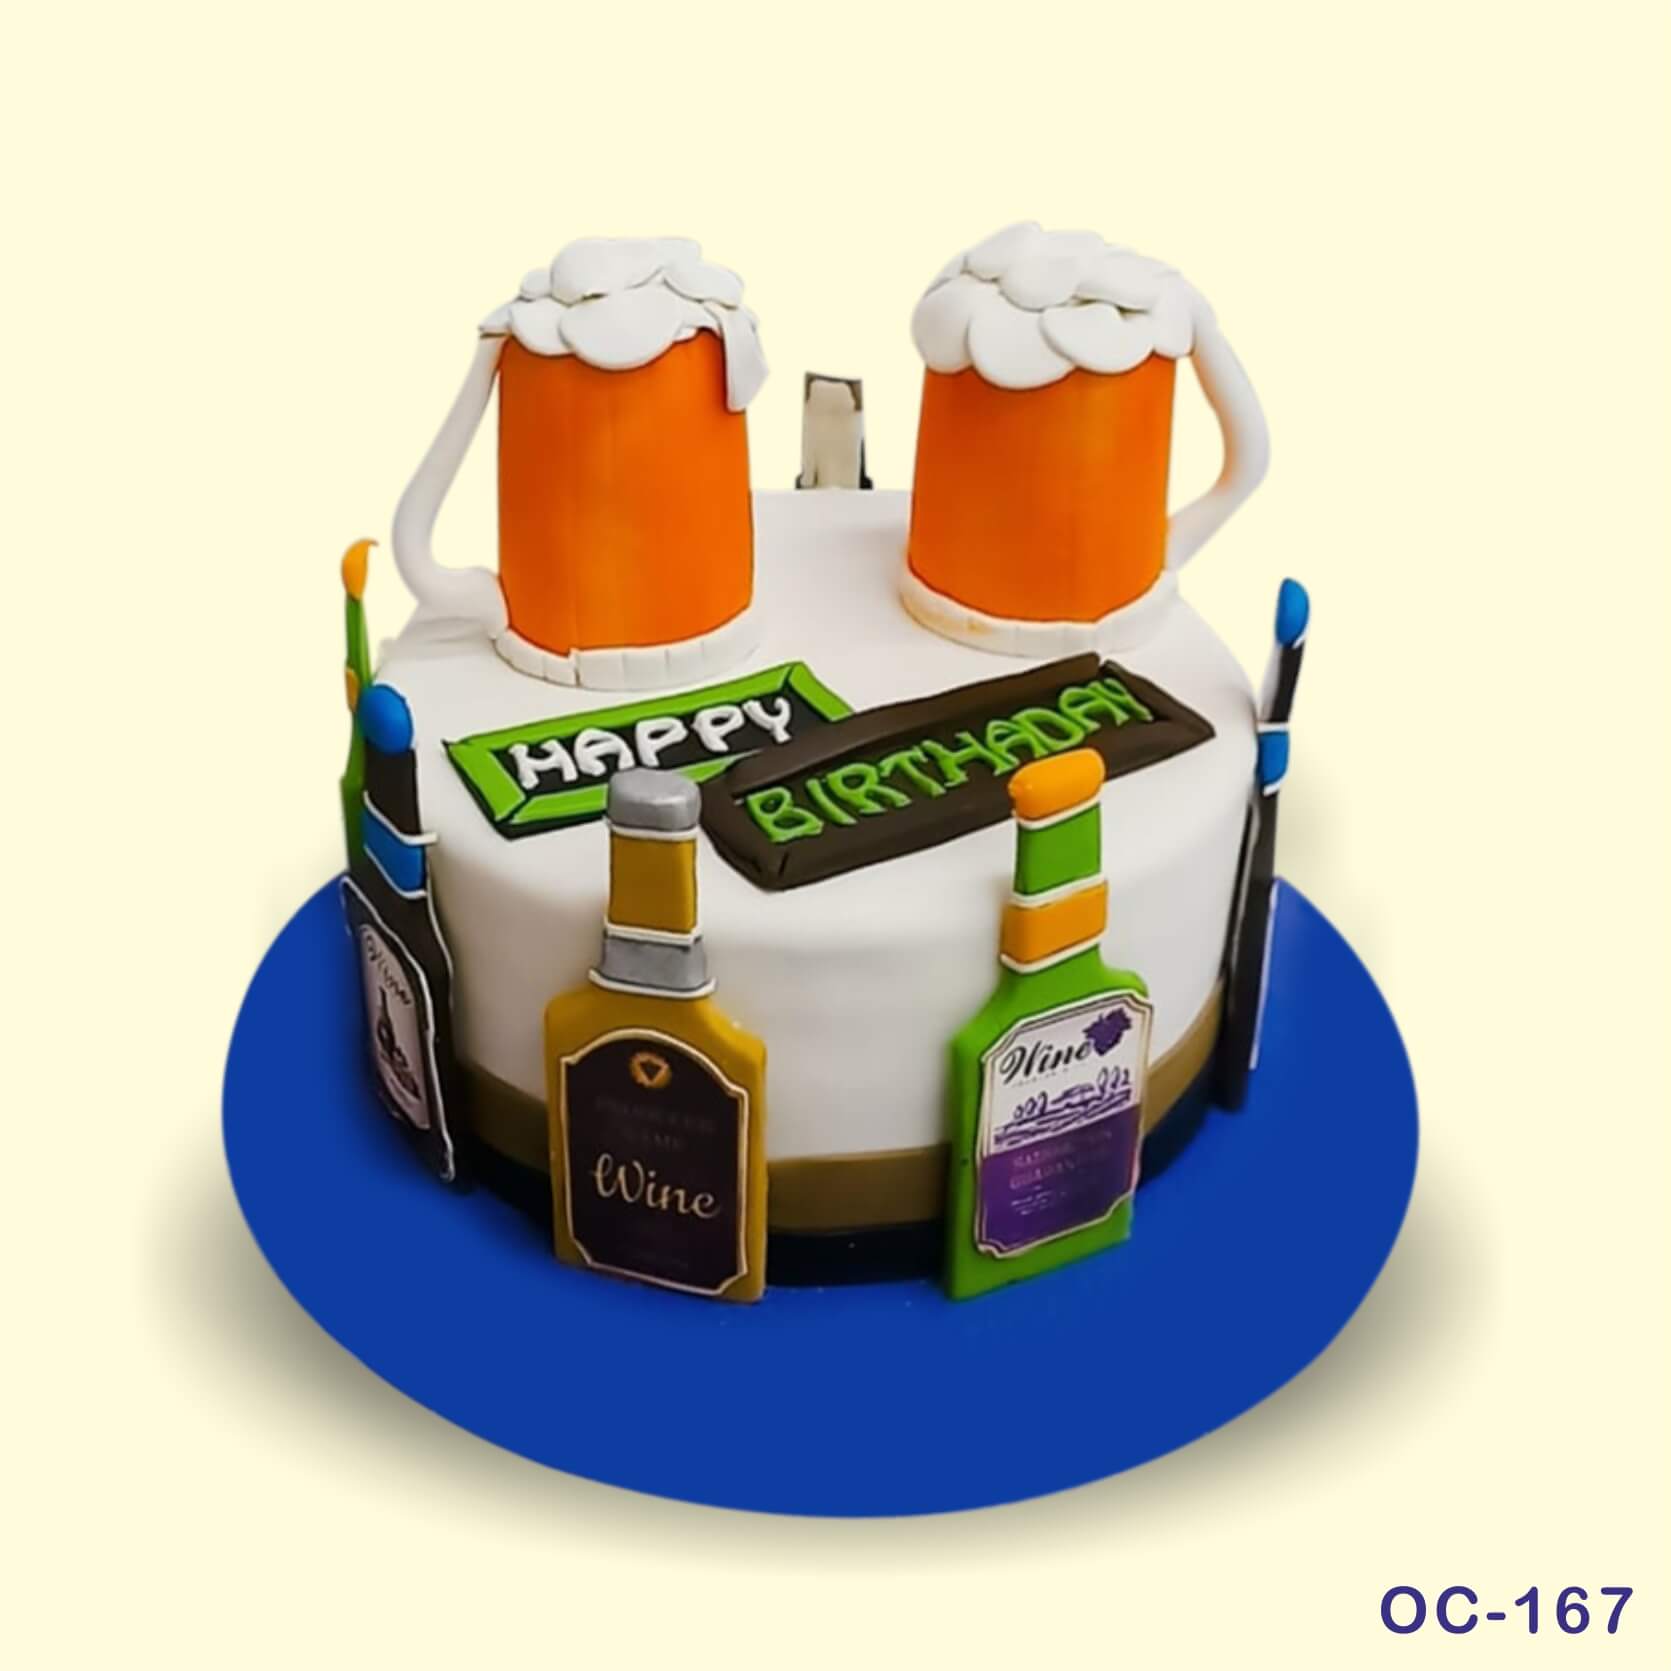 Corona Beer Fan Cake – Creme Castle